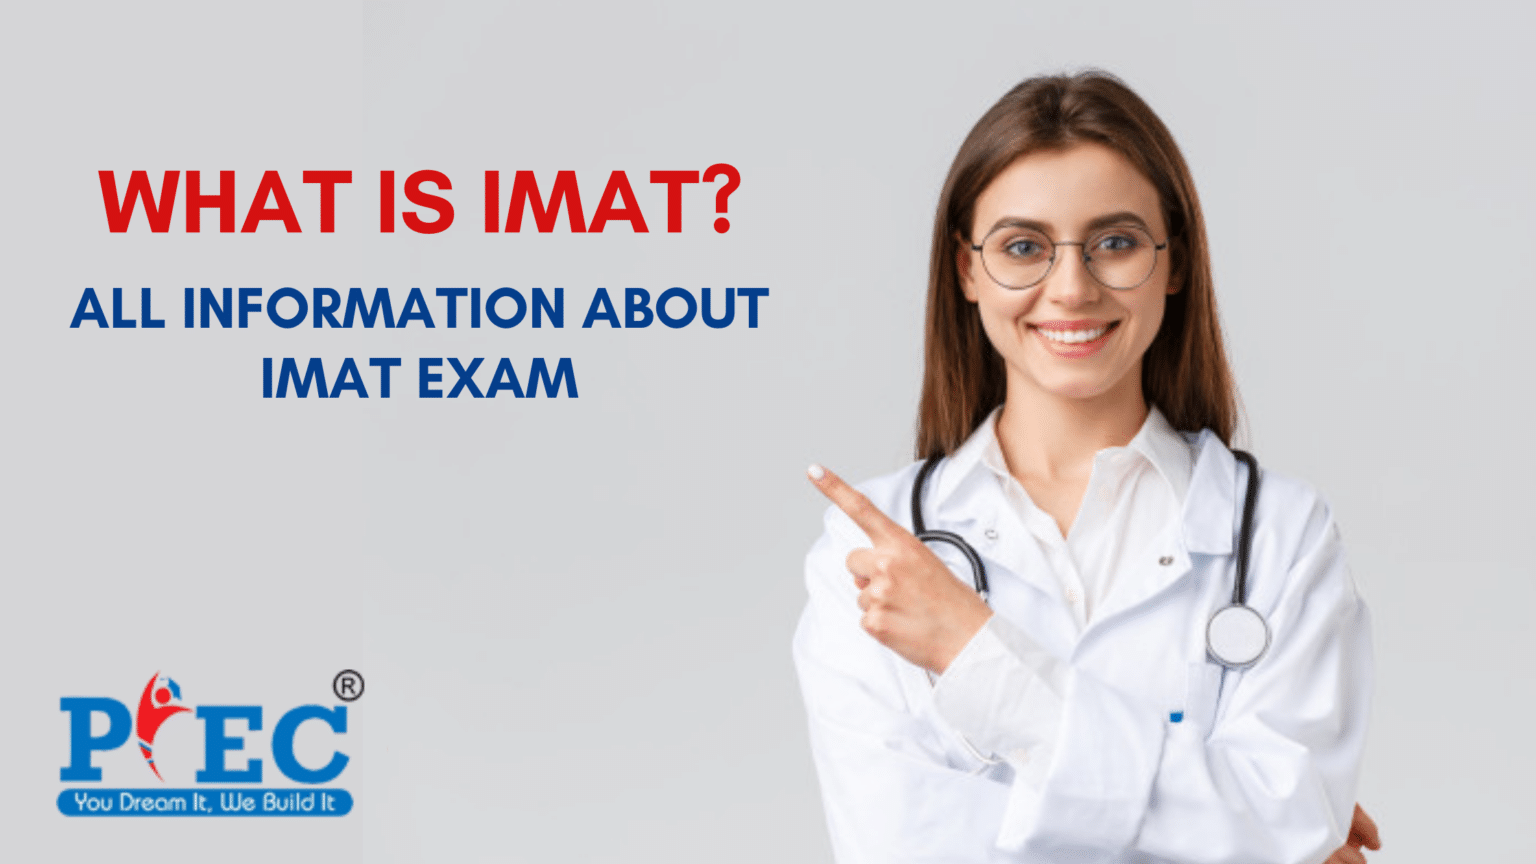 IMAT Exam or International Medical Admission Test